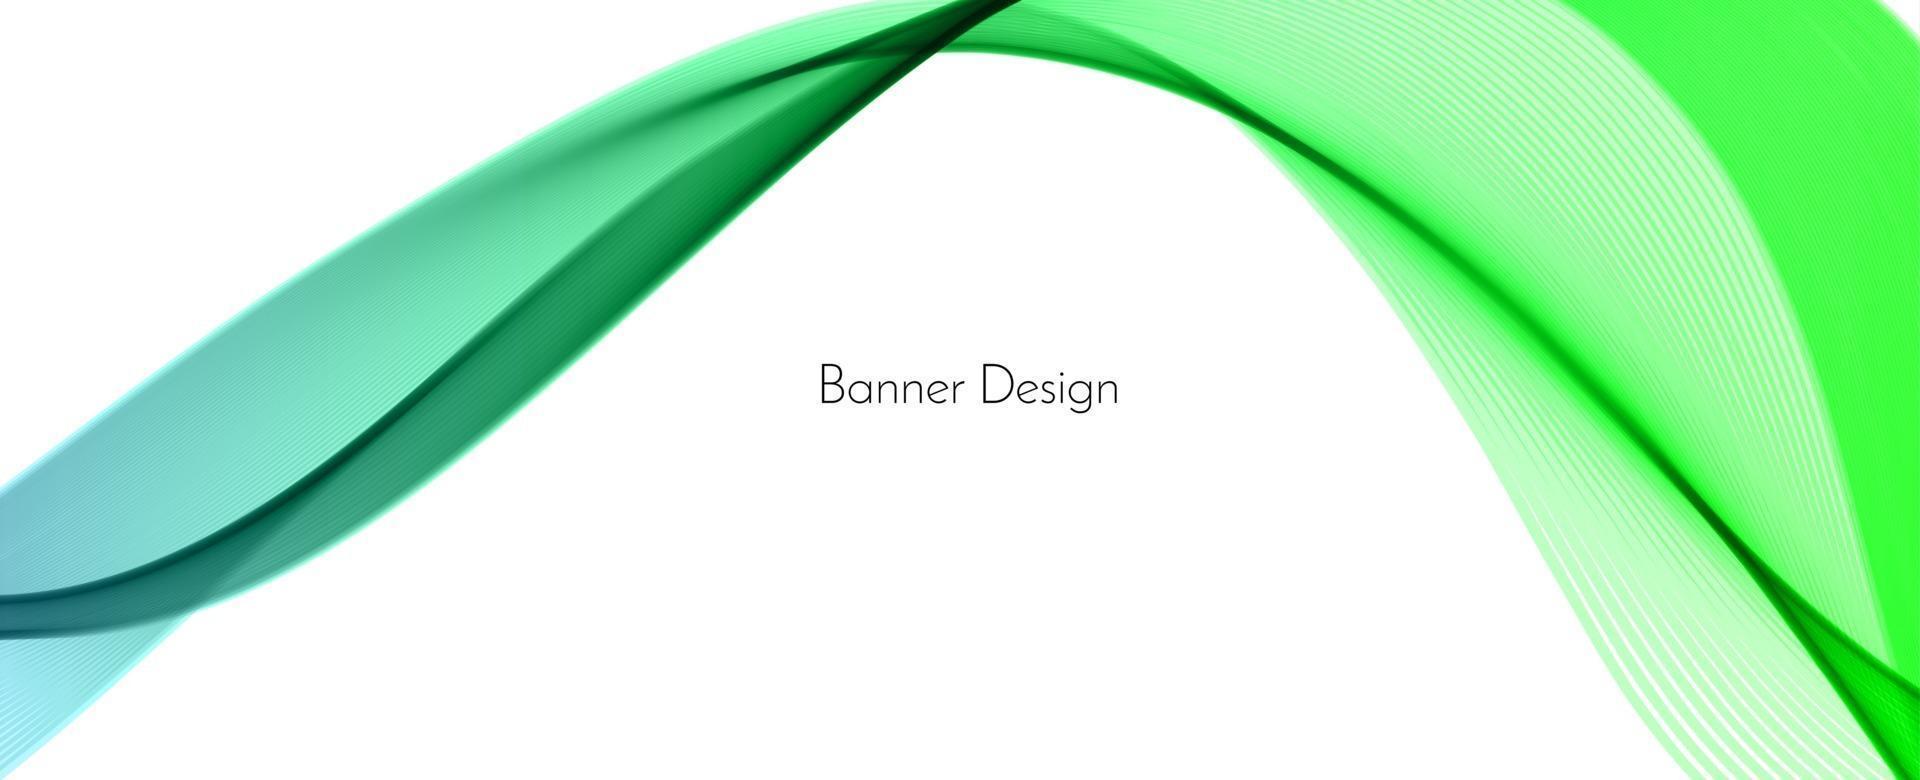 Fondo de banner de diseño de onda decorativa moderno verde abstracto vector